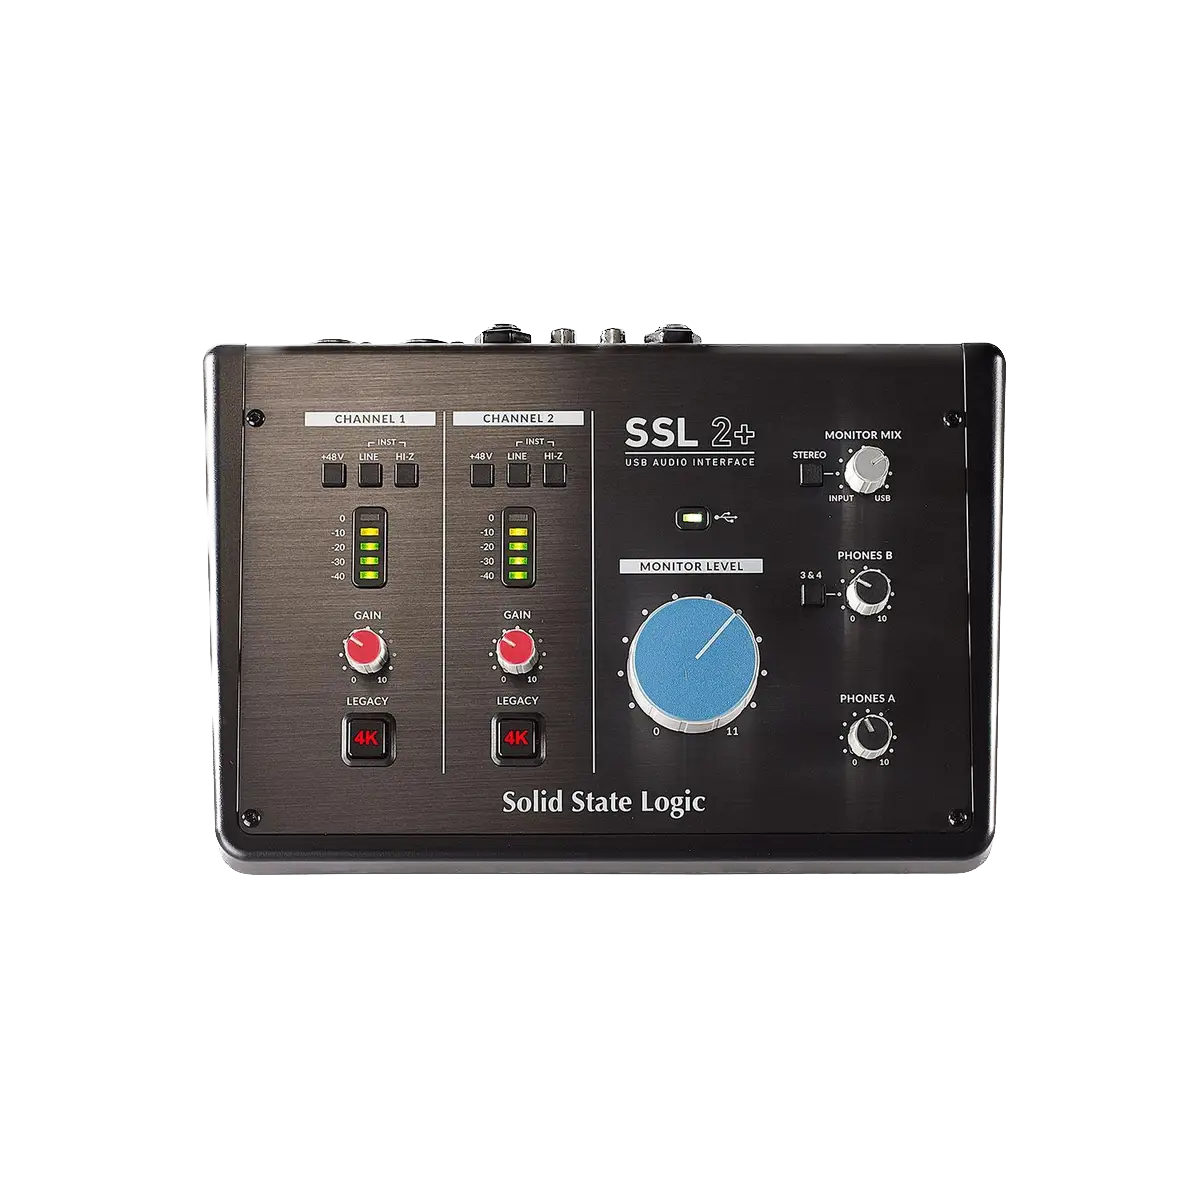 SSL 2+ USB Audio Interface